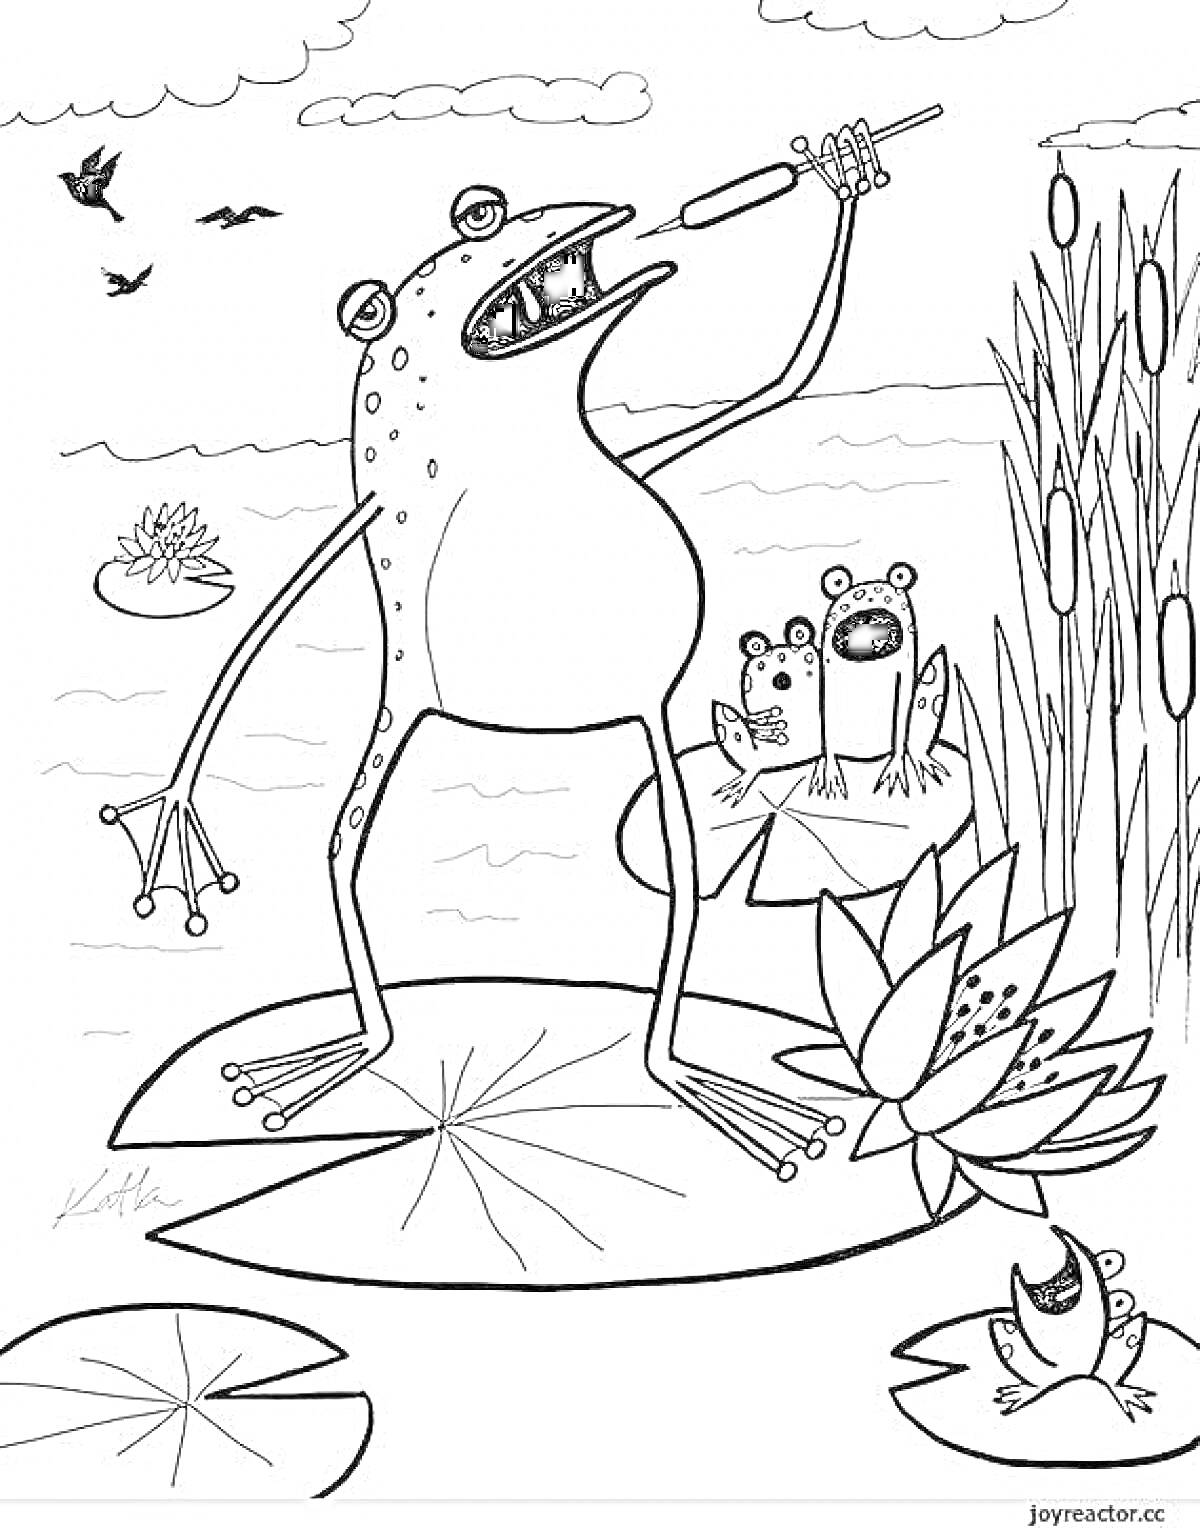 Лягушка на кувшинке с тростником, две лягушки, птицы, облака, водяные лилии и щенок